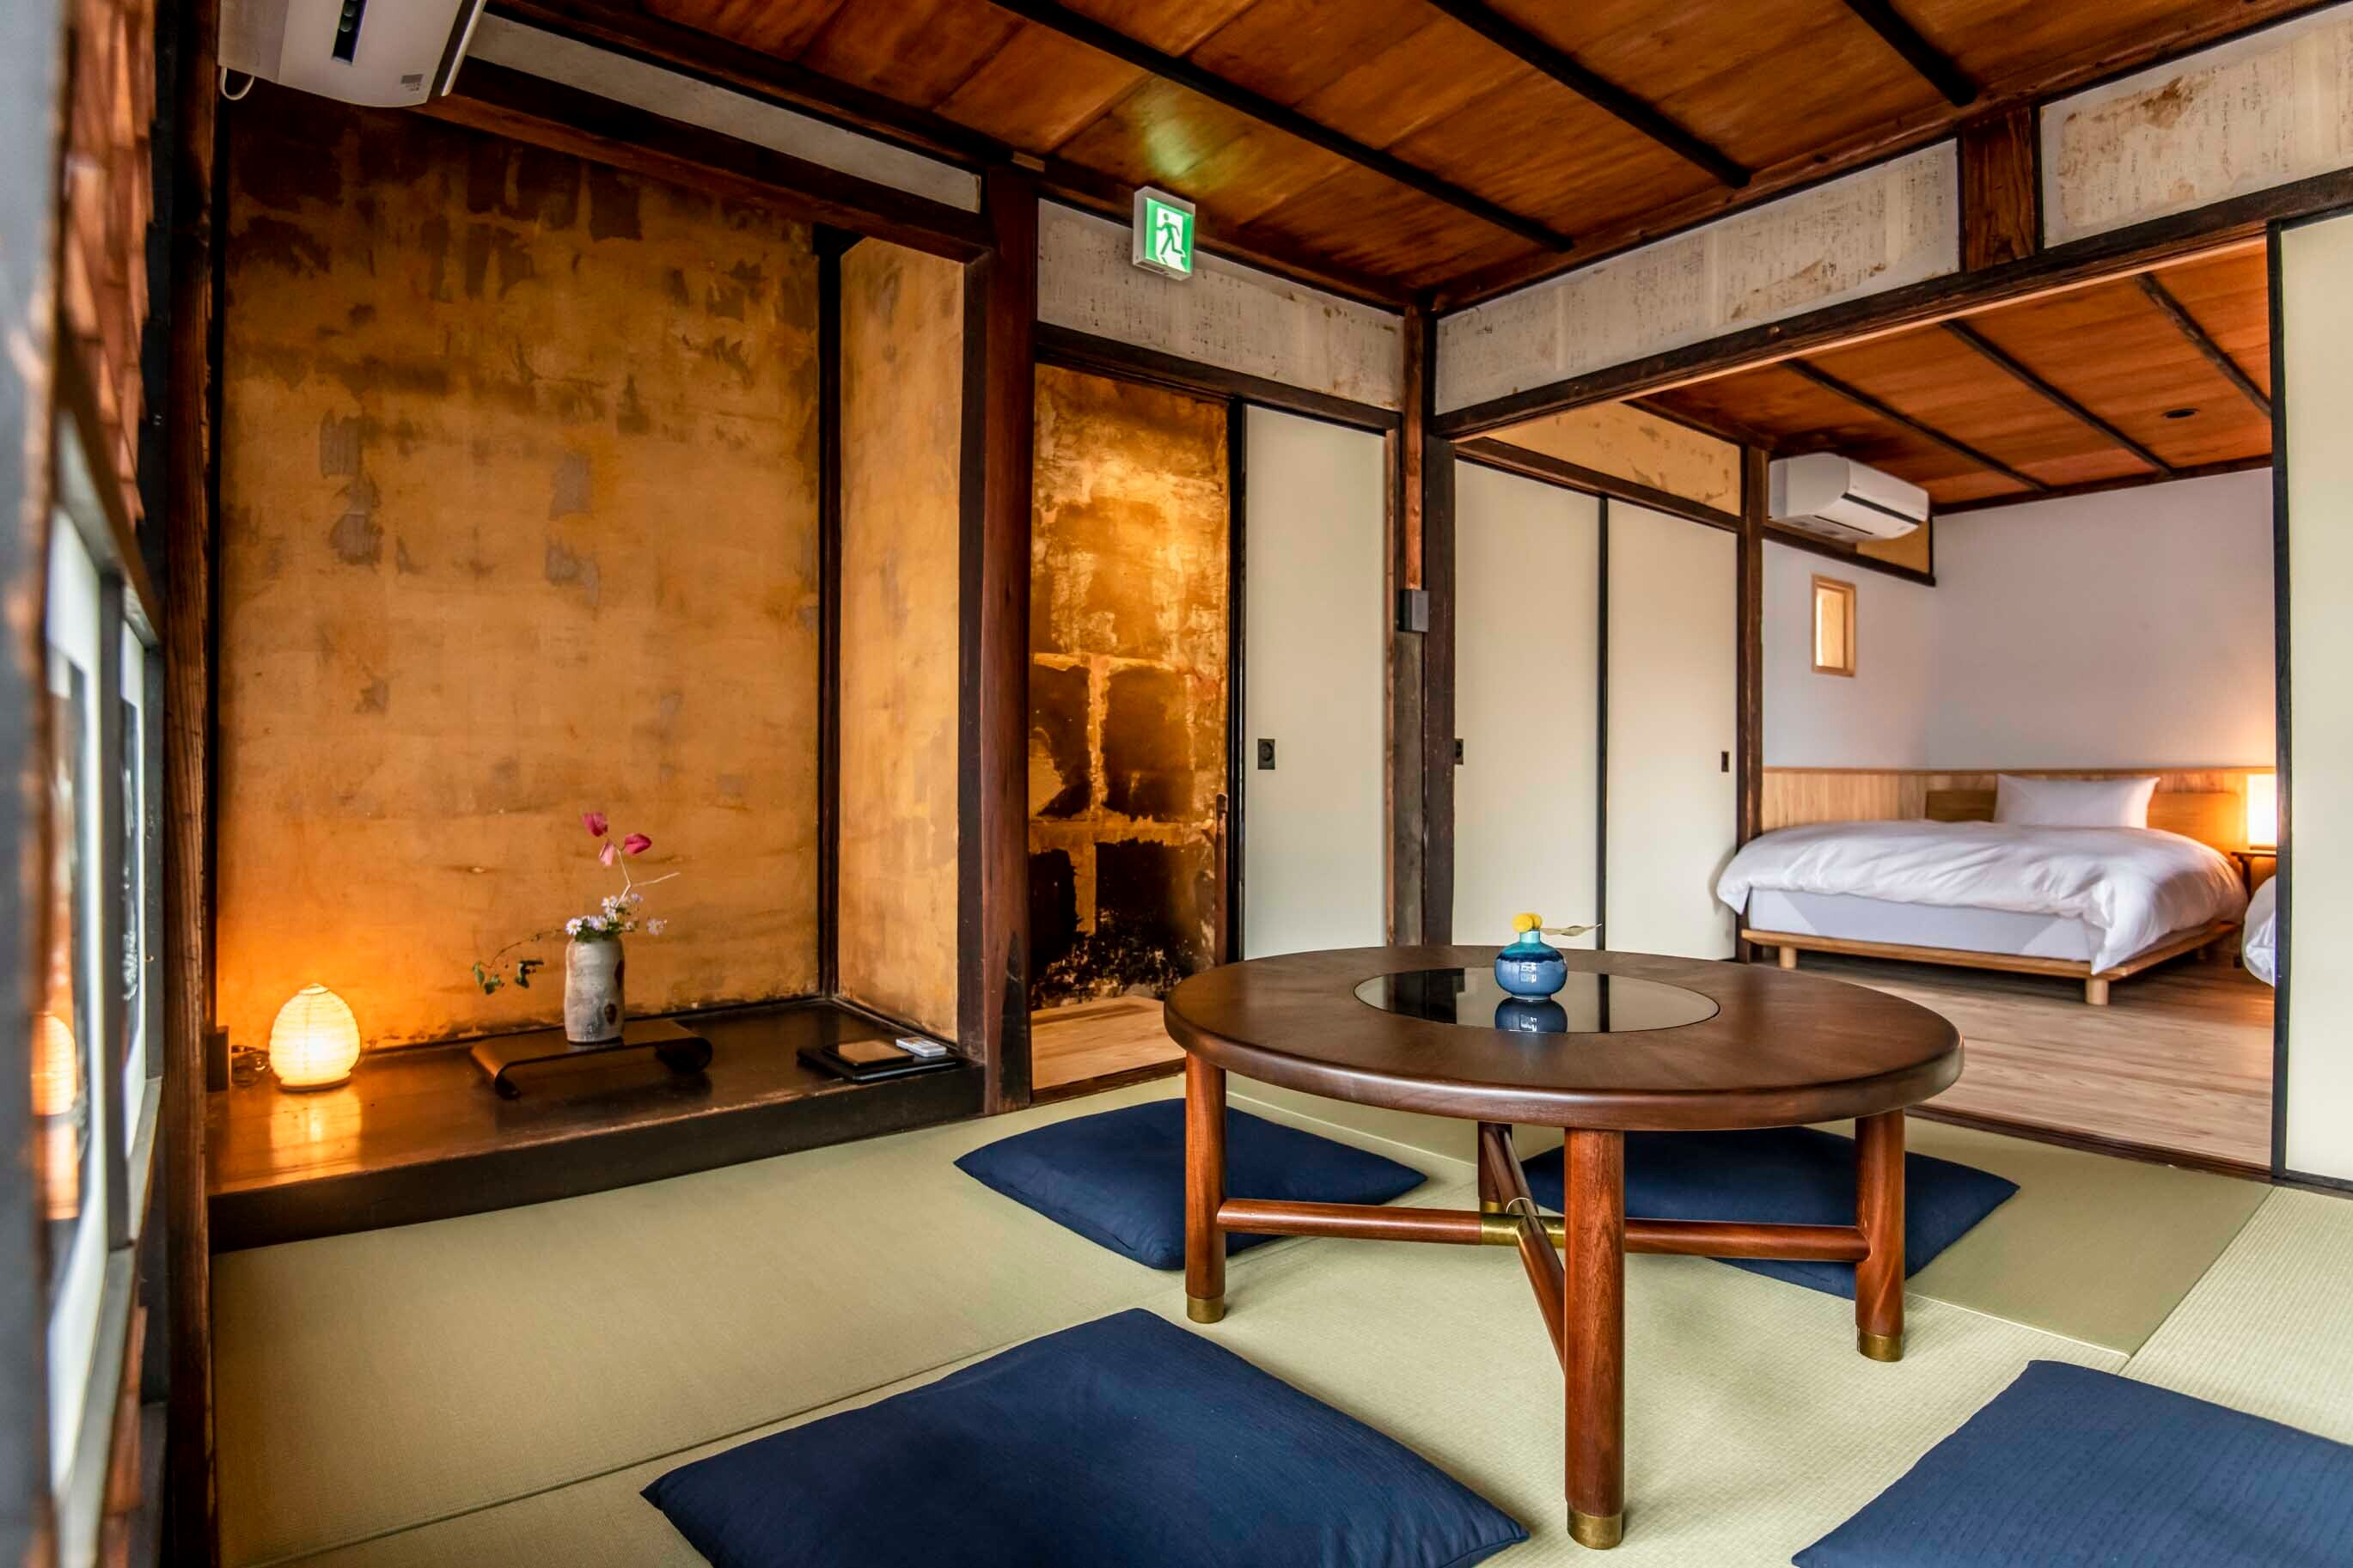 Main house tatami room